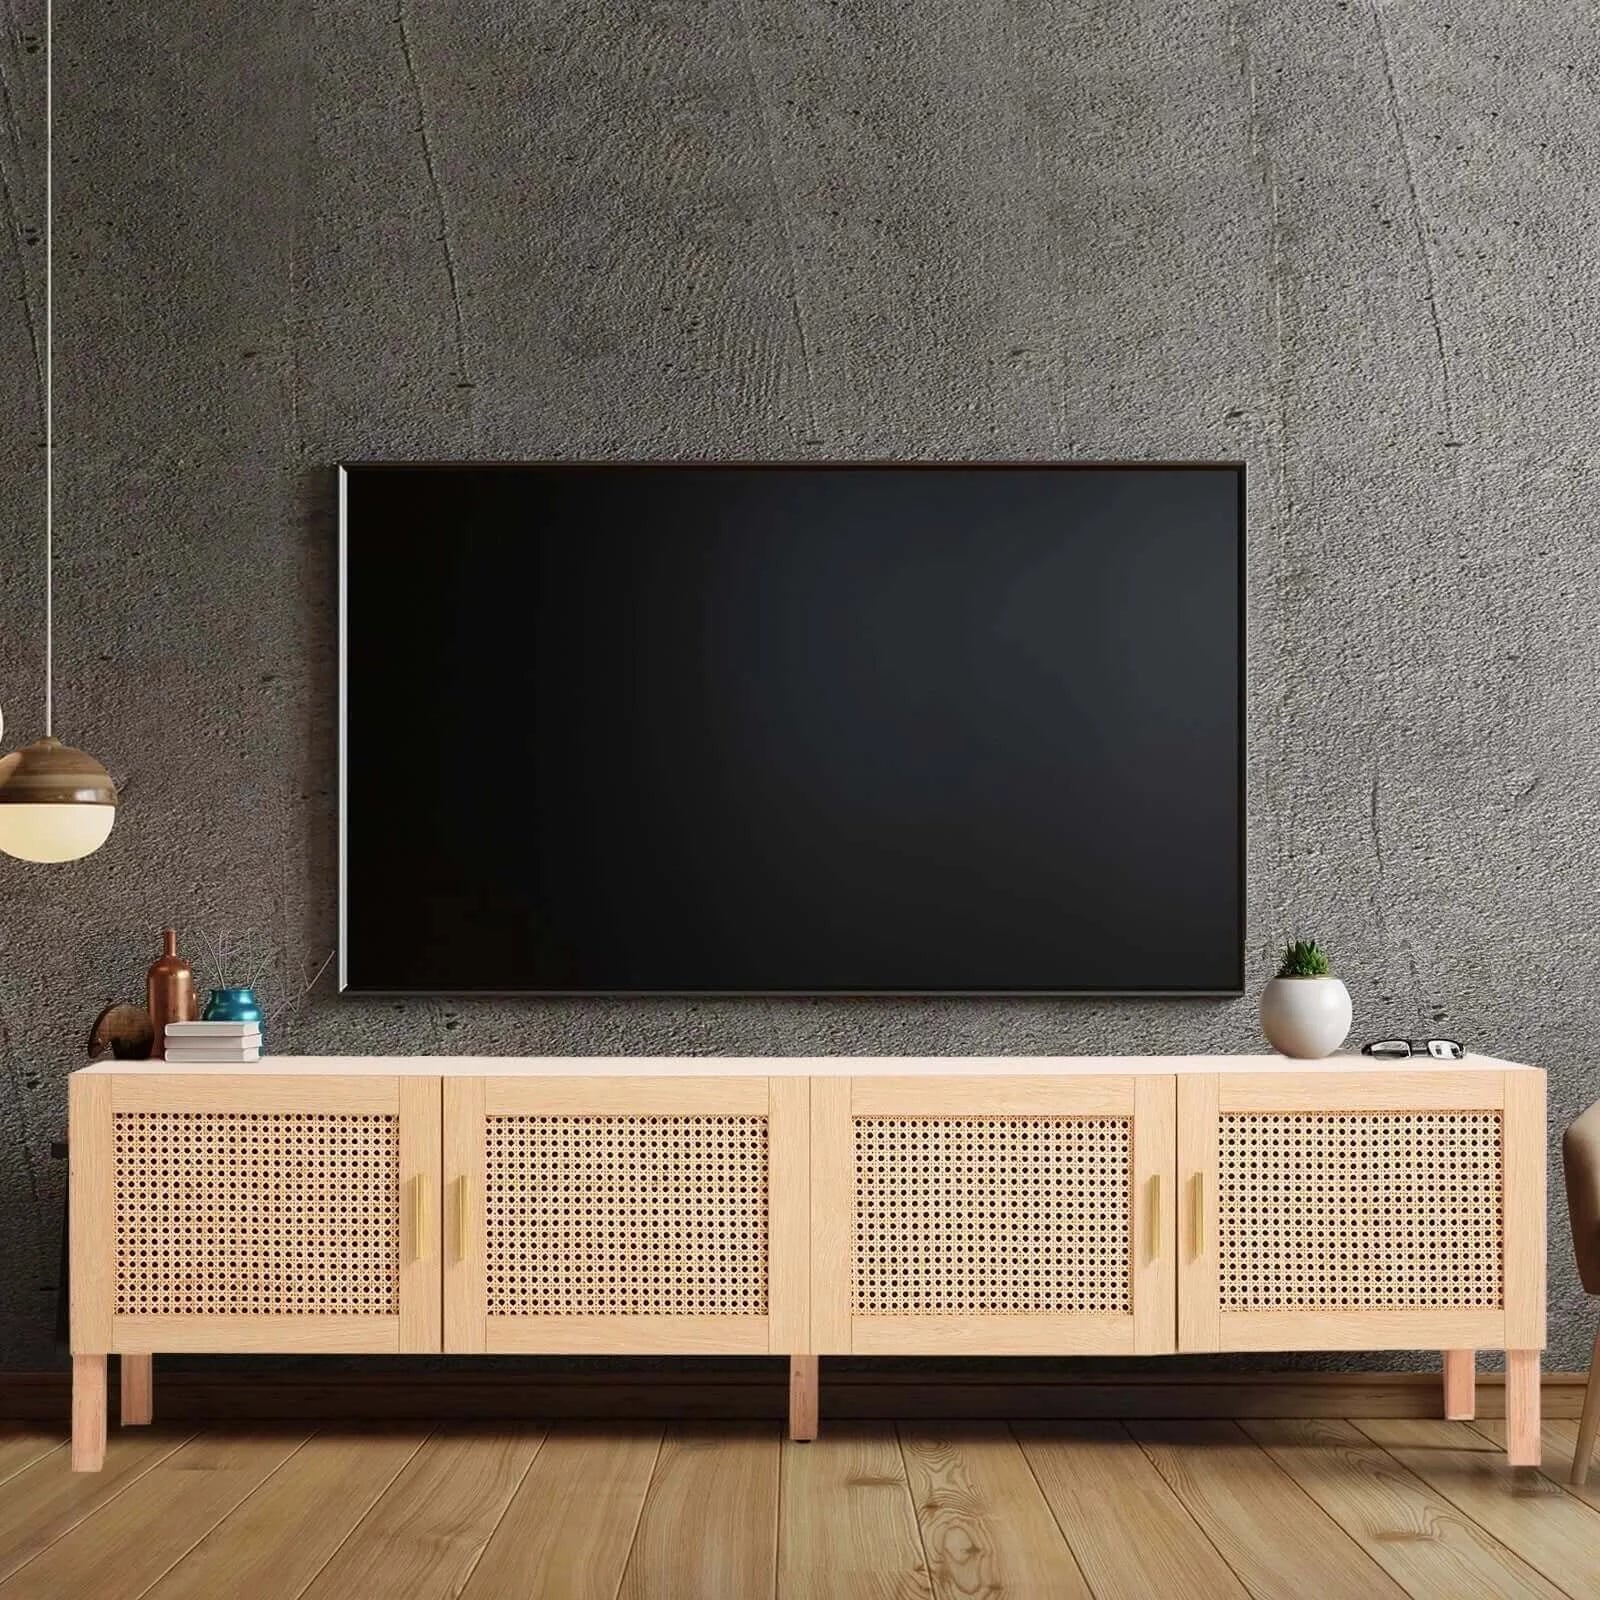 Buy casa decor santiago rattan entertainment unit tv stand cabinet storage oak - upinteriors-Upinteriors